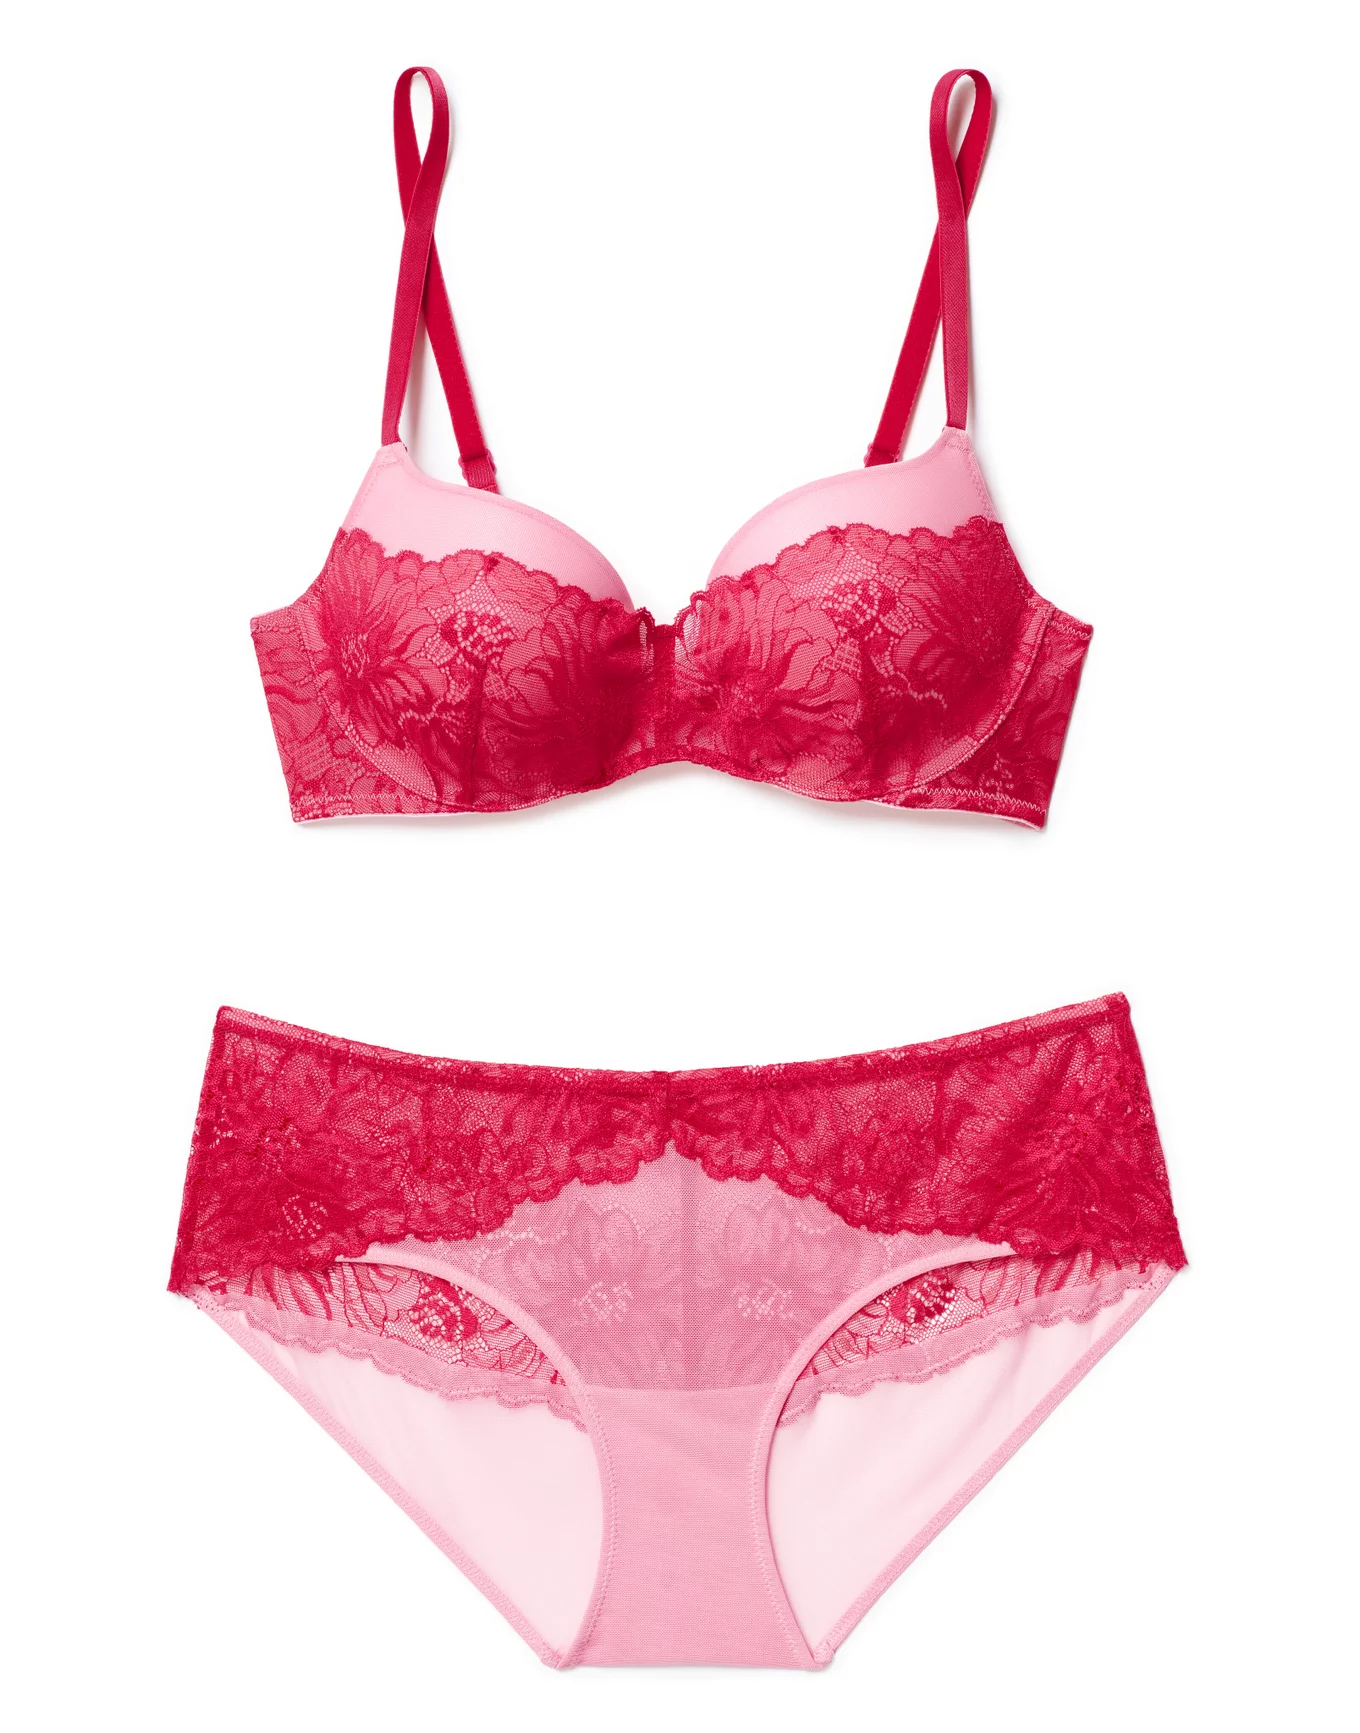 Victoria's Secret PINK bra size 32a